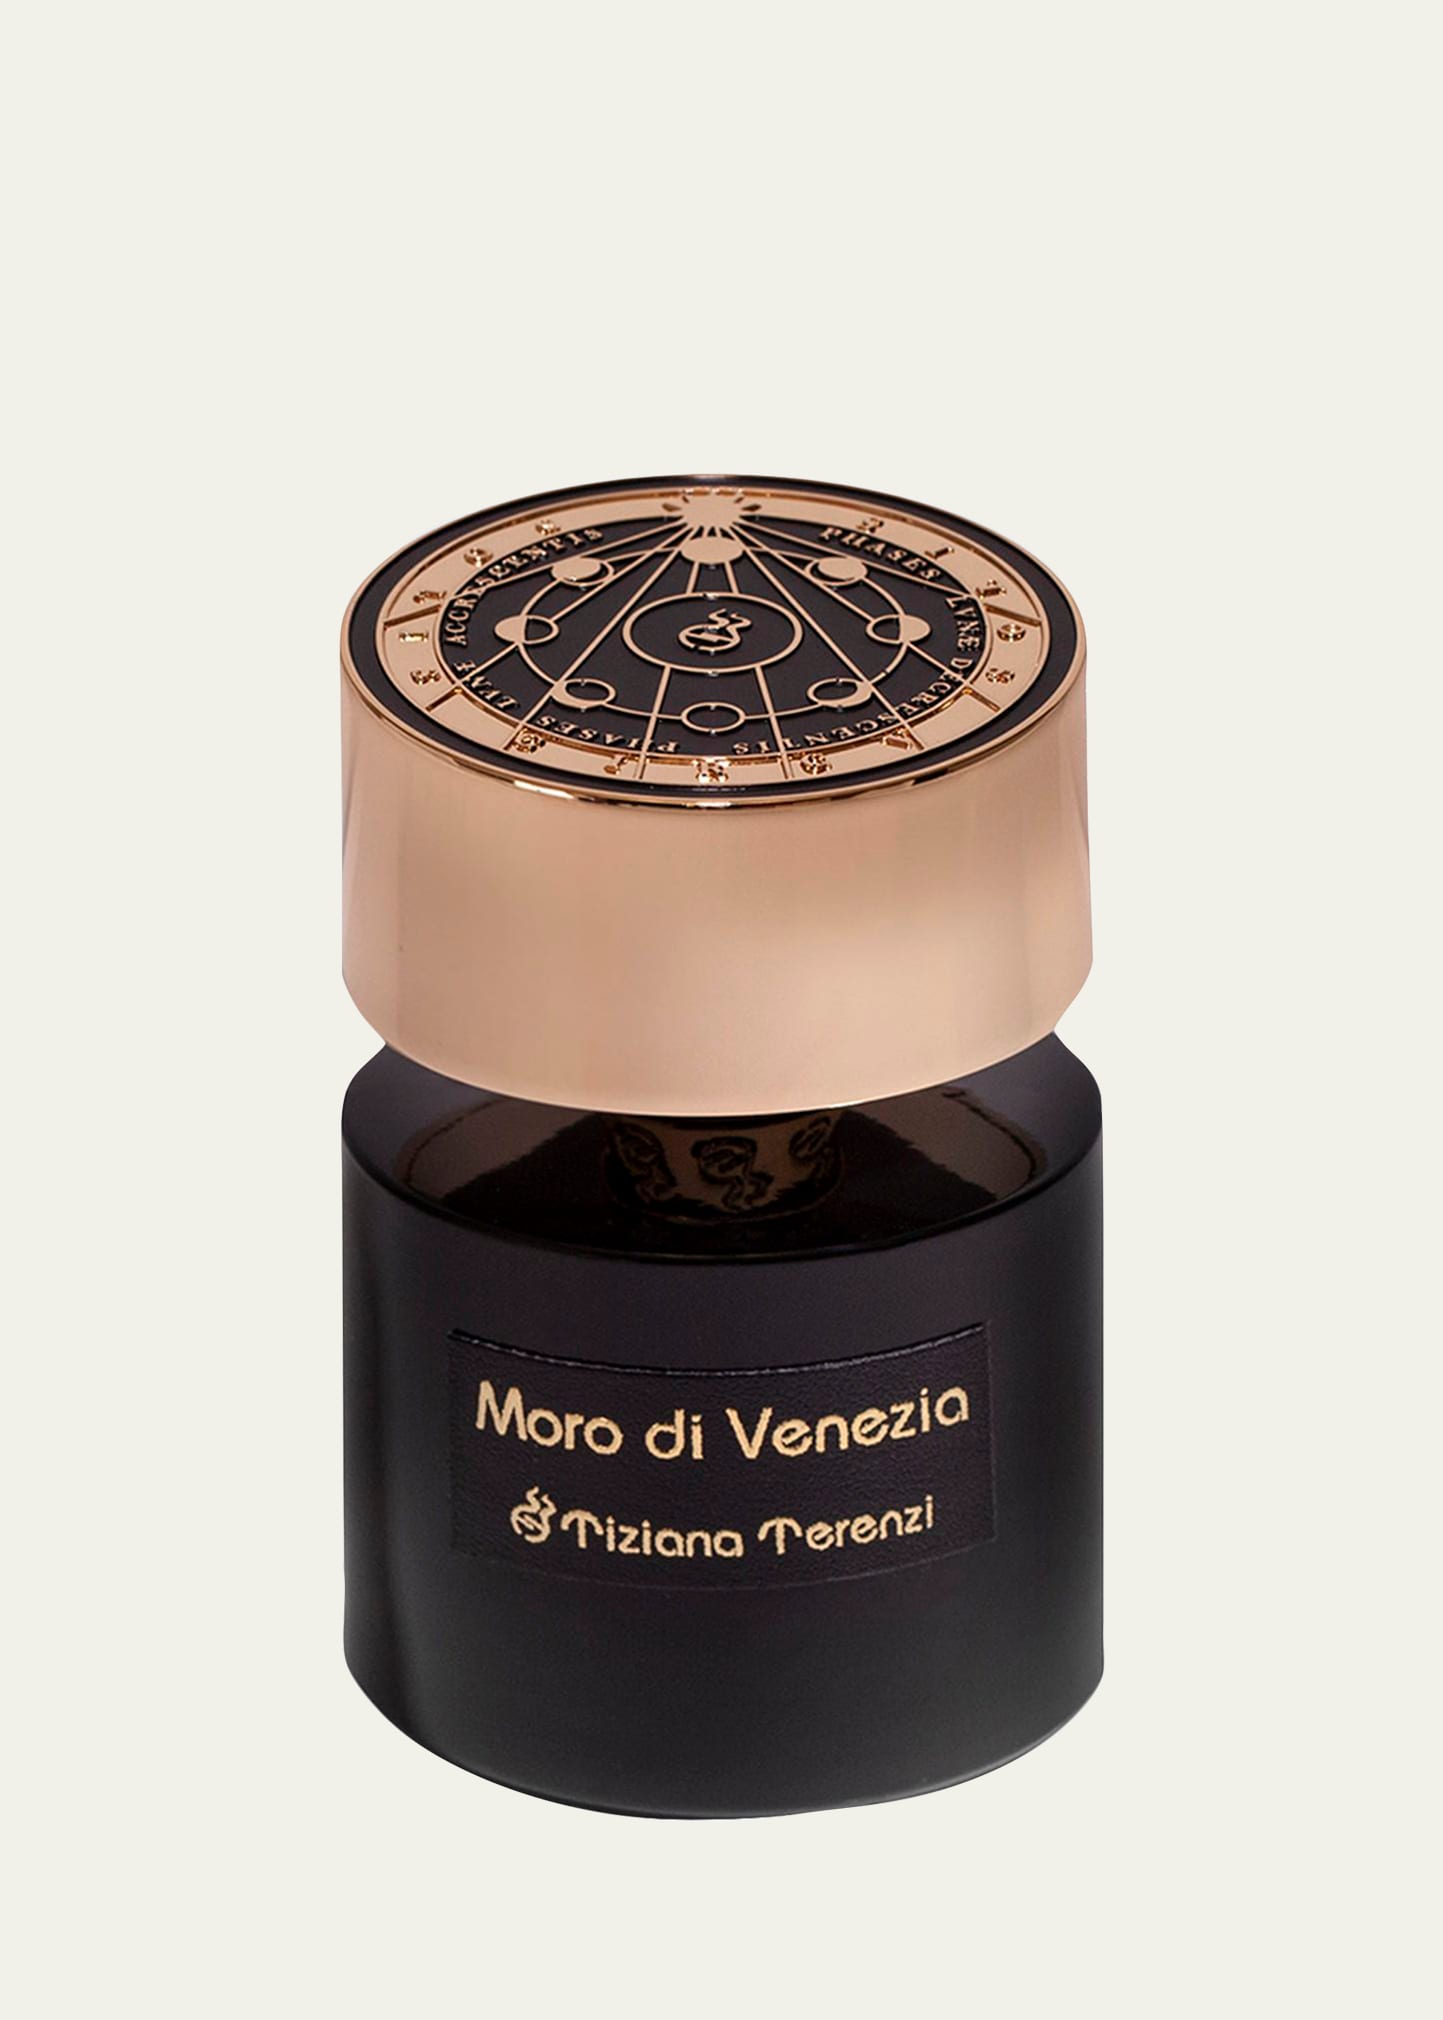 Moro di Venezia Extrait de Parfum, 3.4 oz.